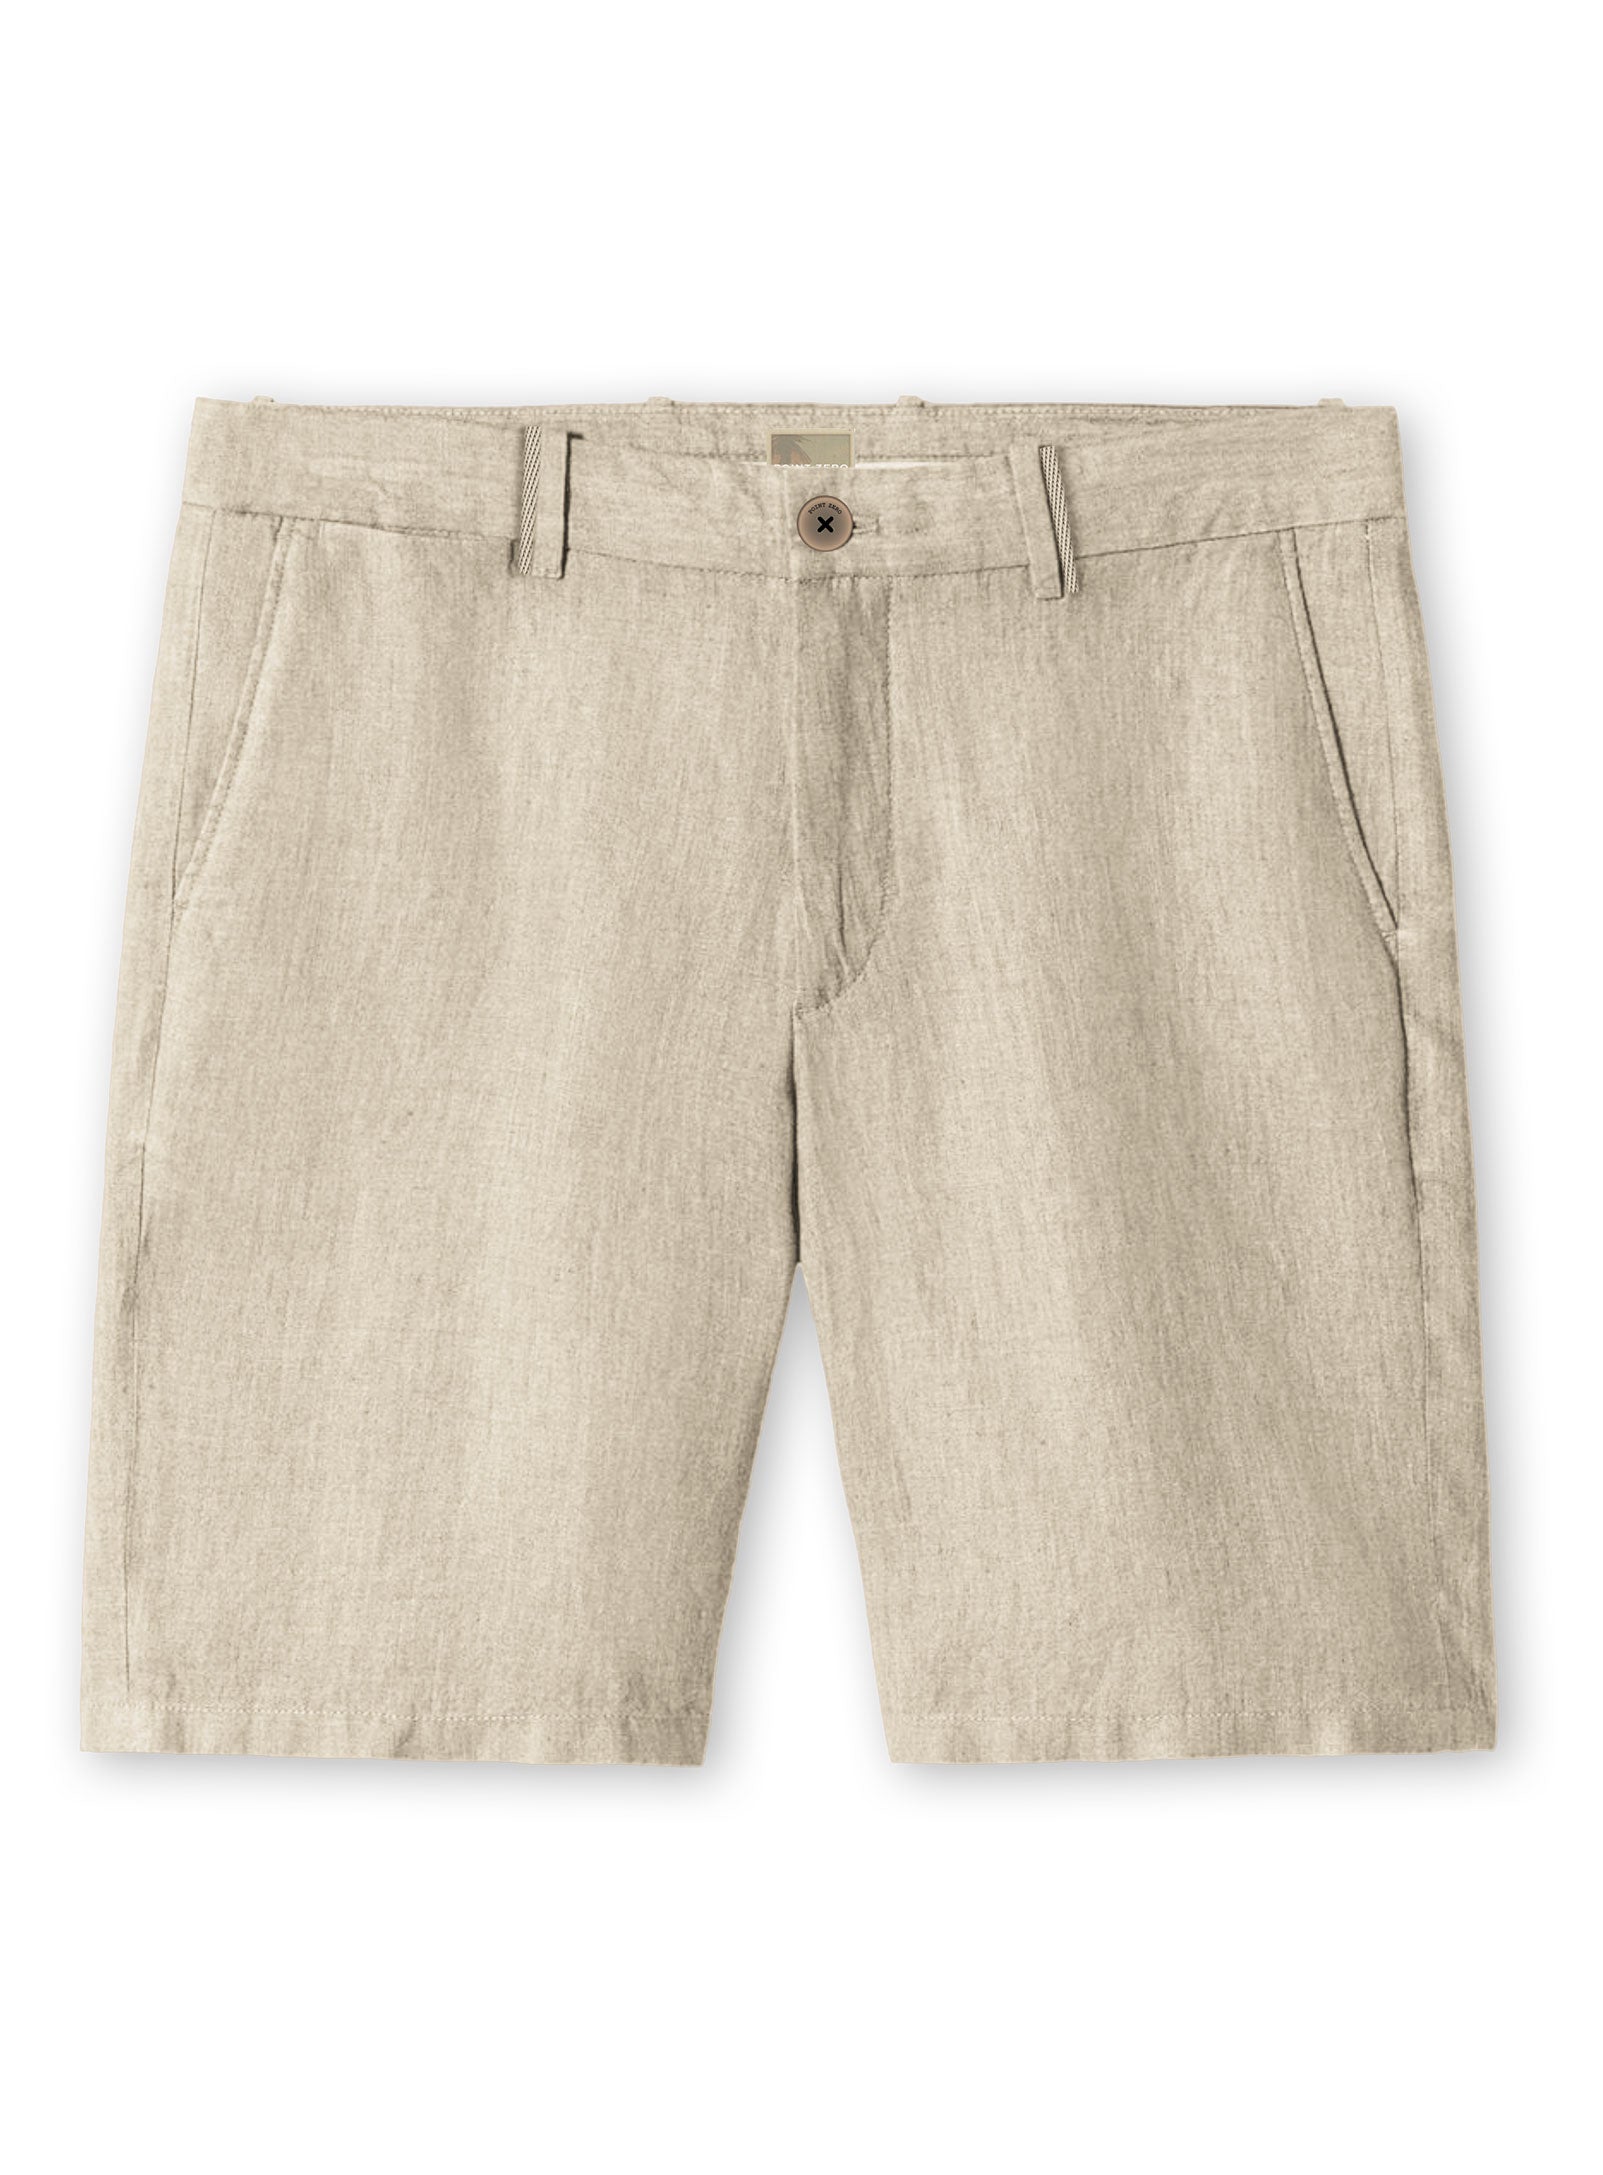 LIAM| Linen flat iron front shorts